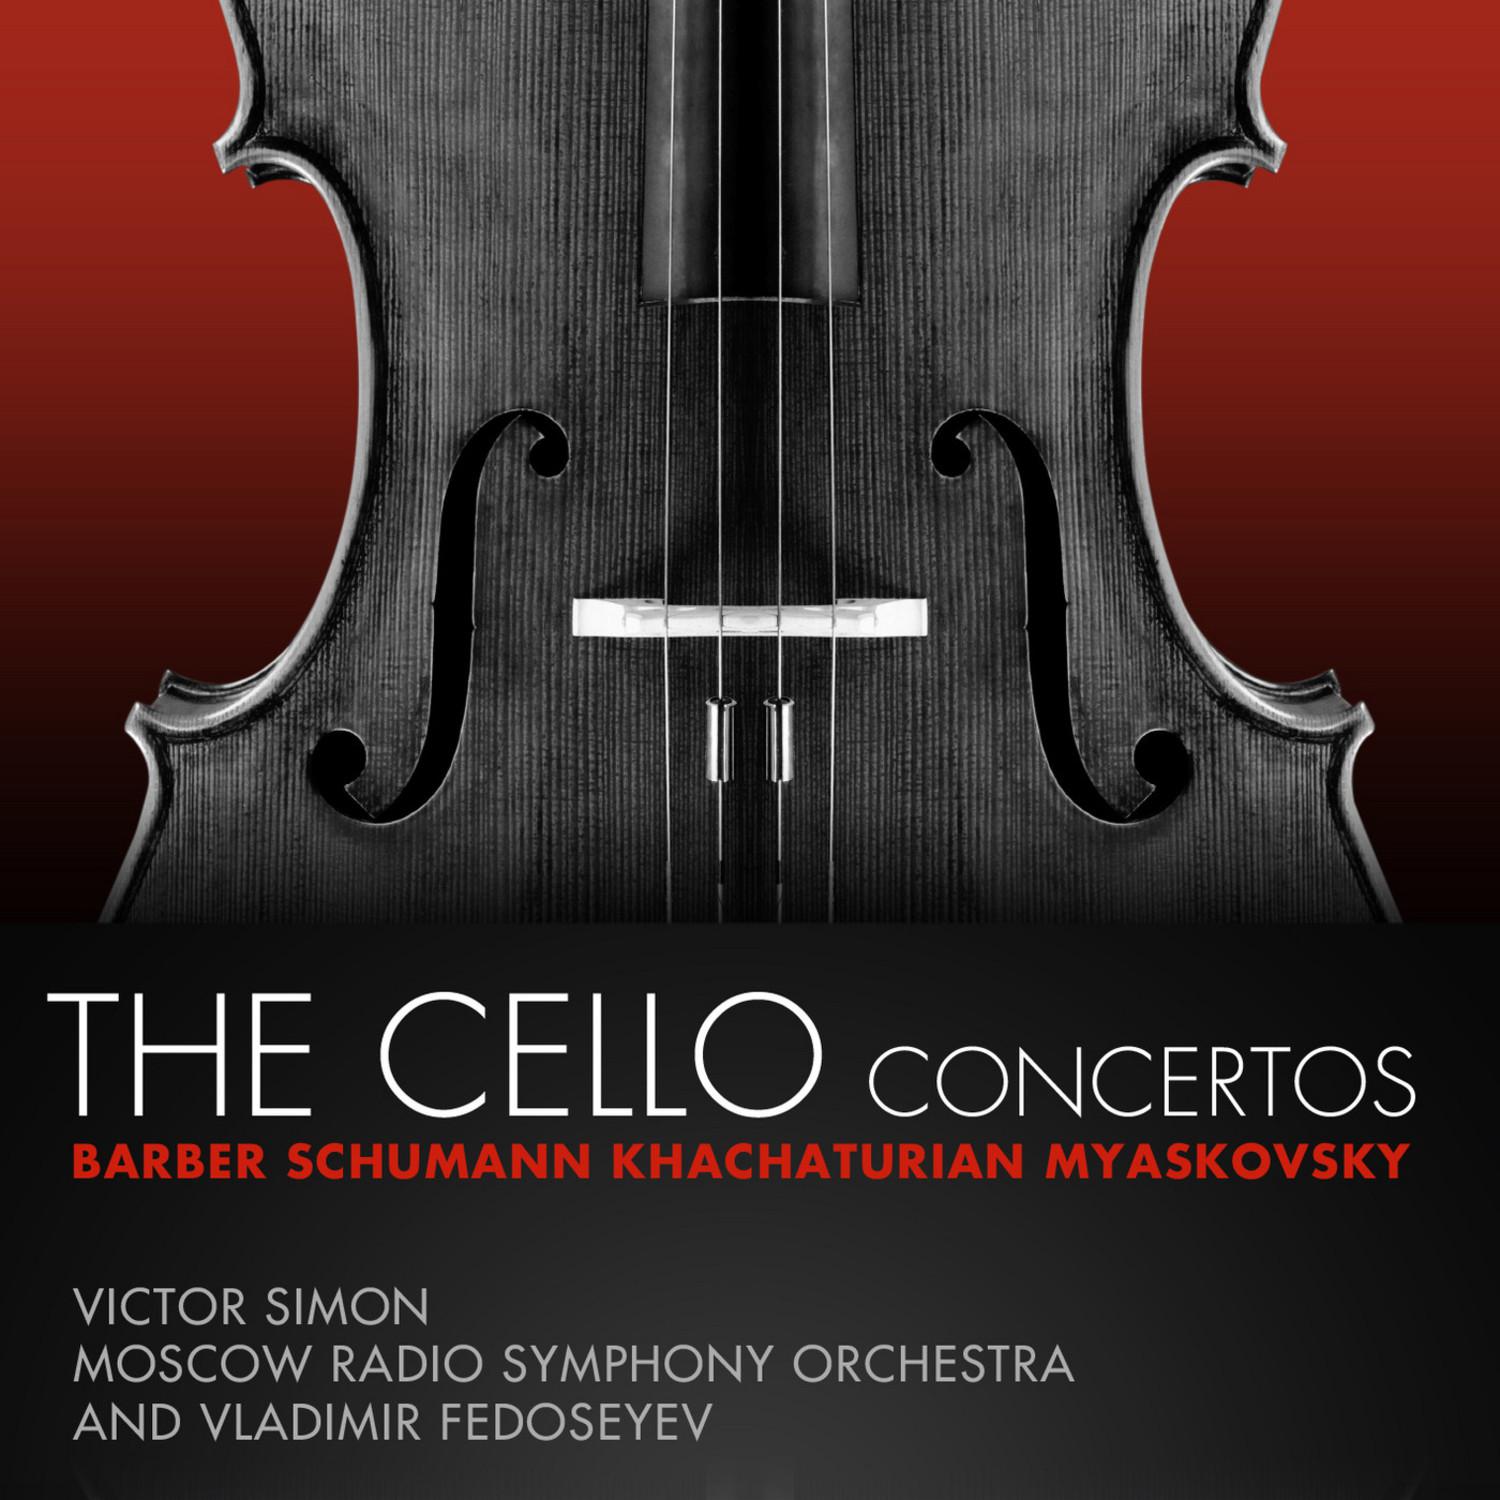 Barber, Schumann, Khachaturian, Myaskovsky: The Cello Concertos